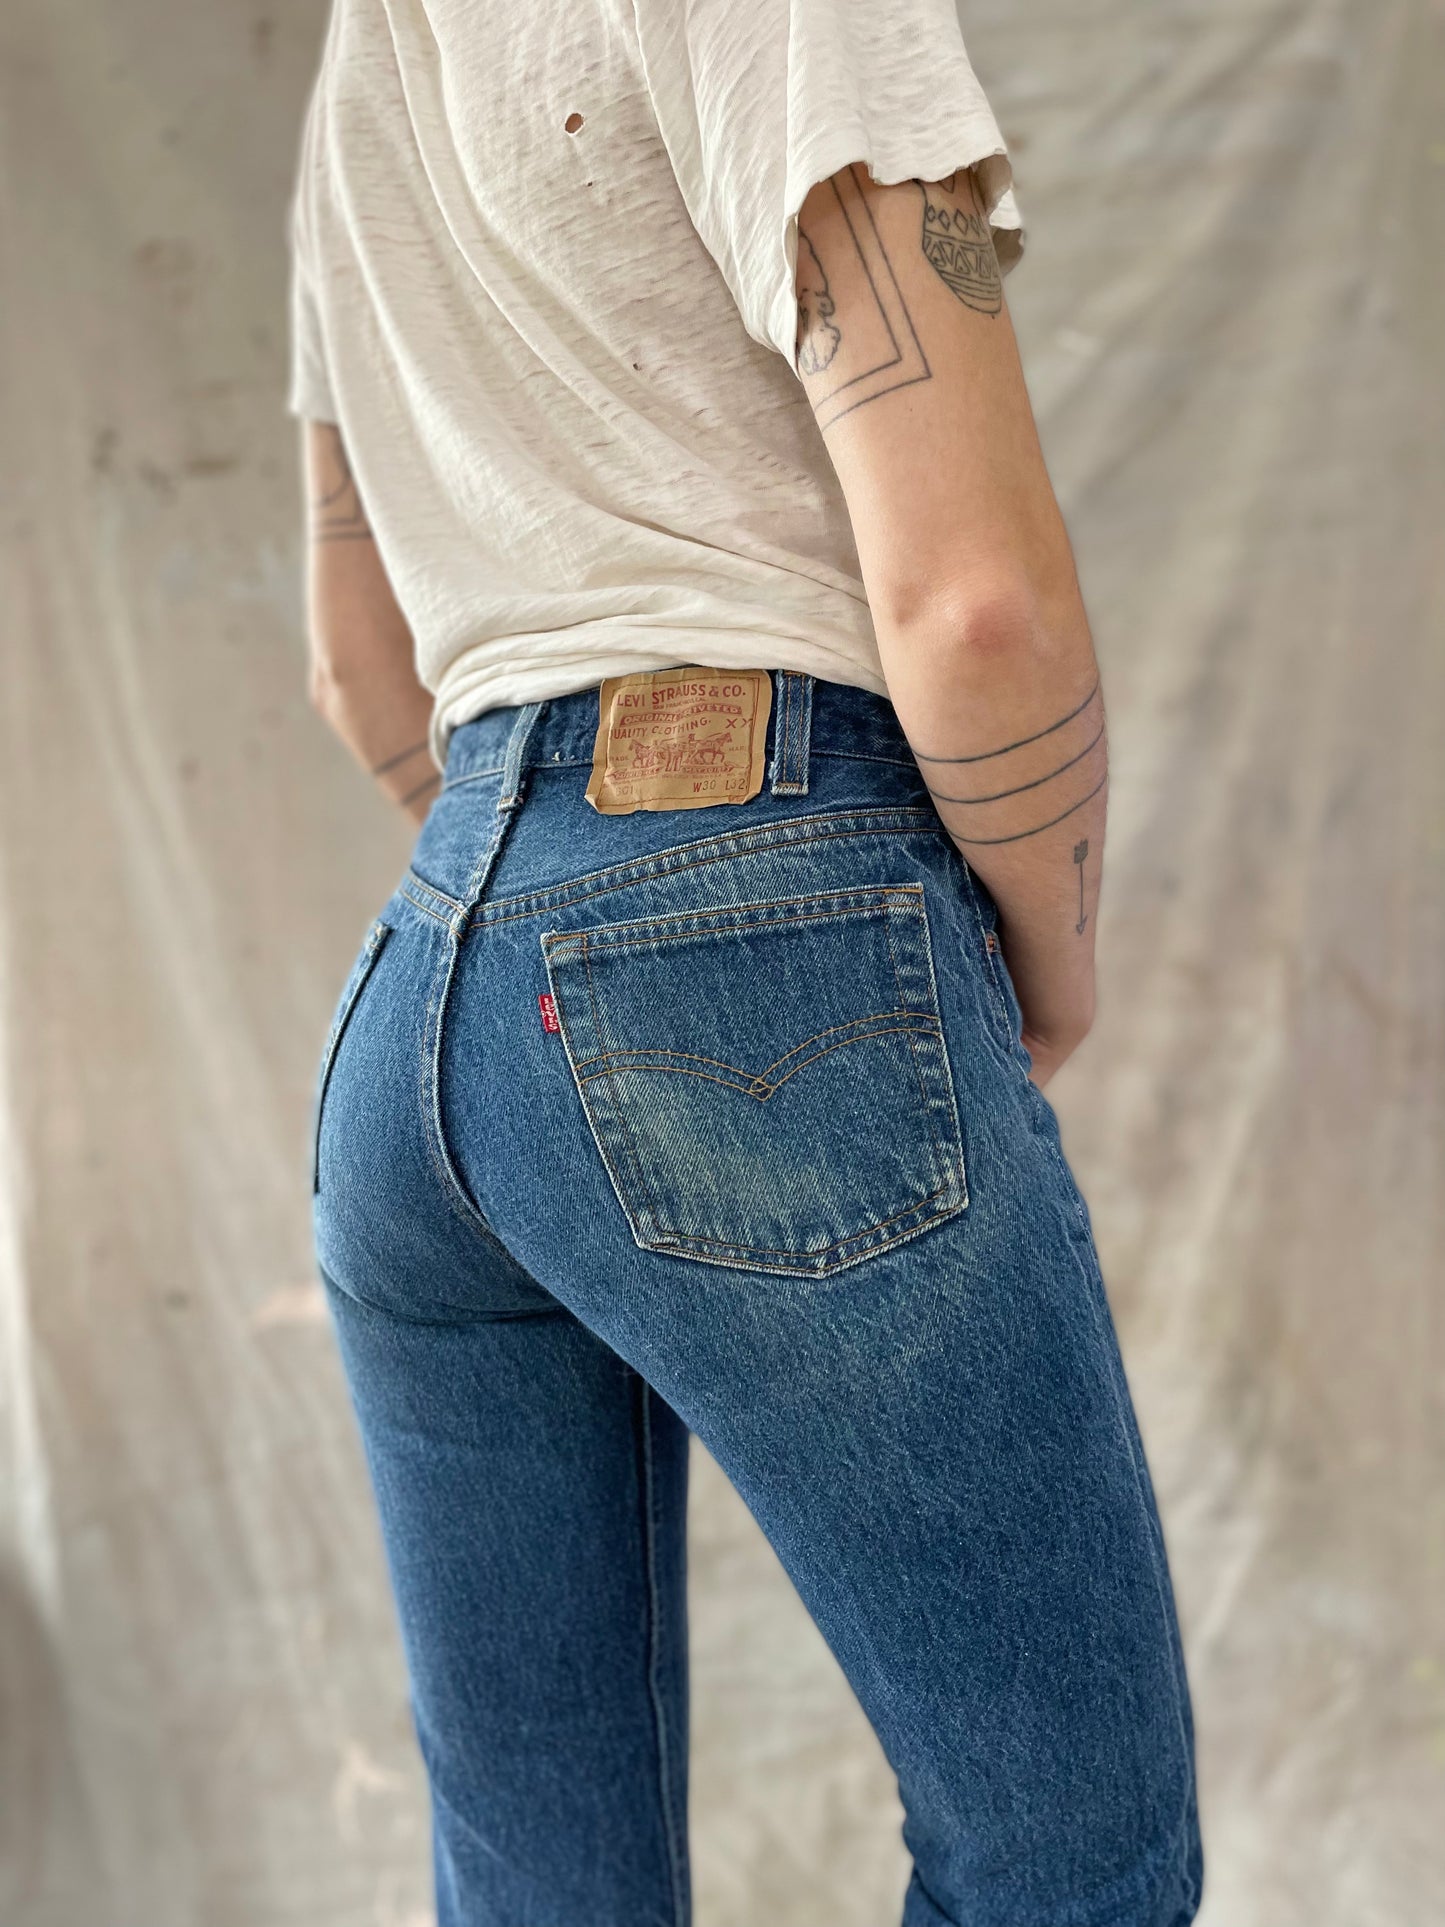 90s Levi’s 501’s Jeans